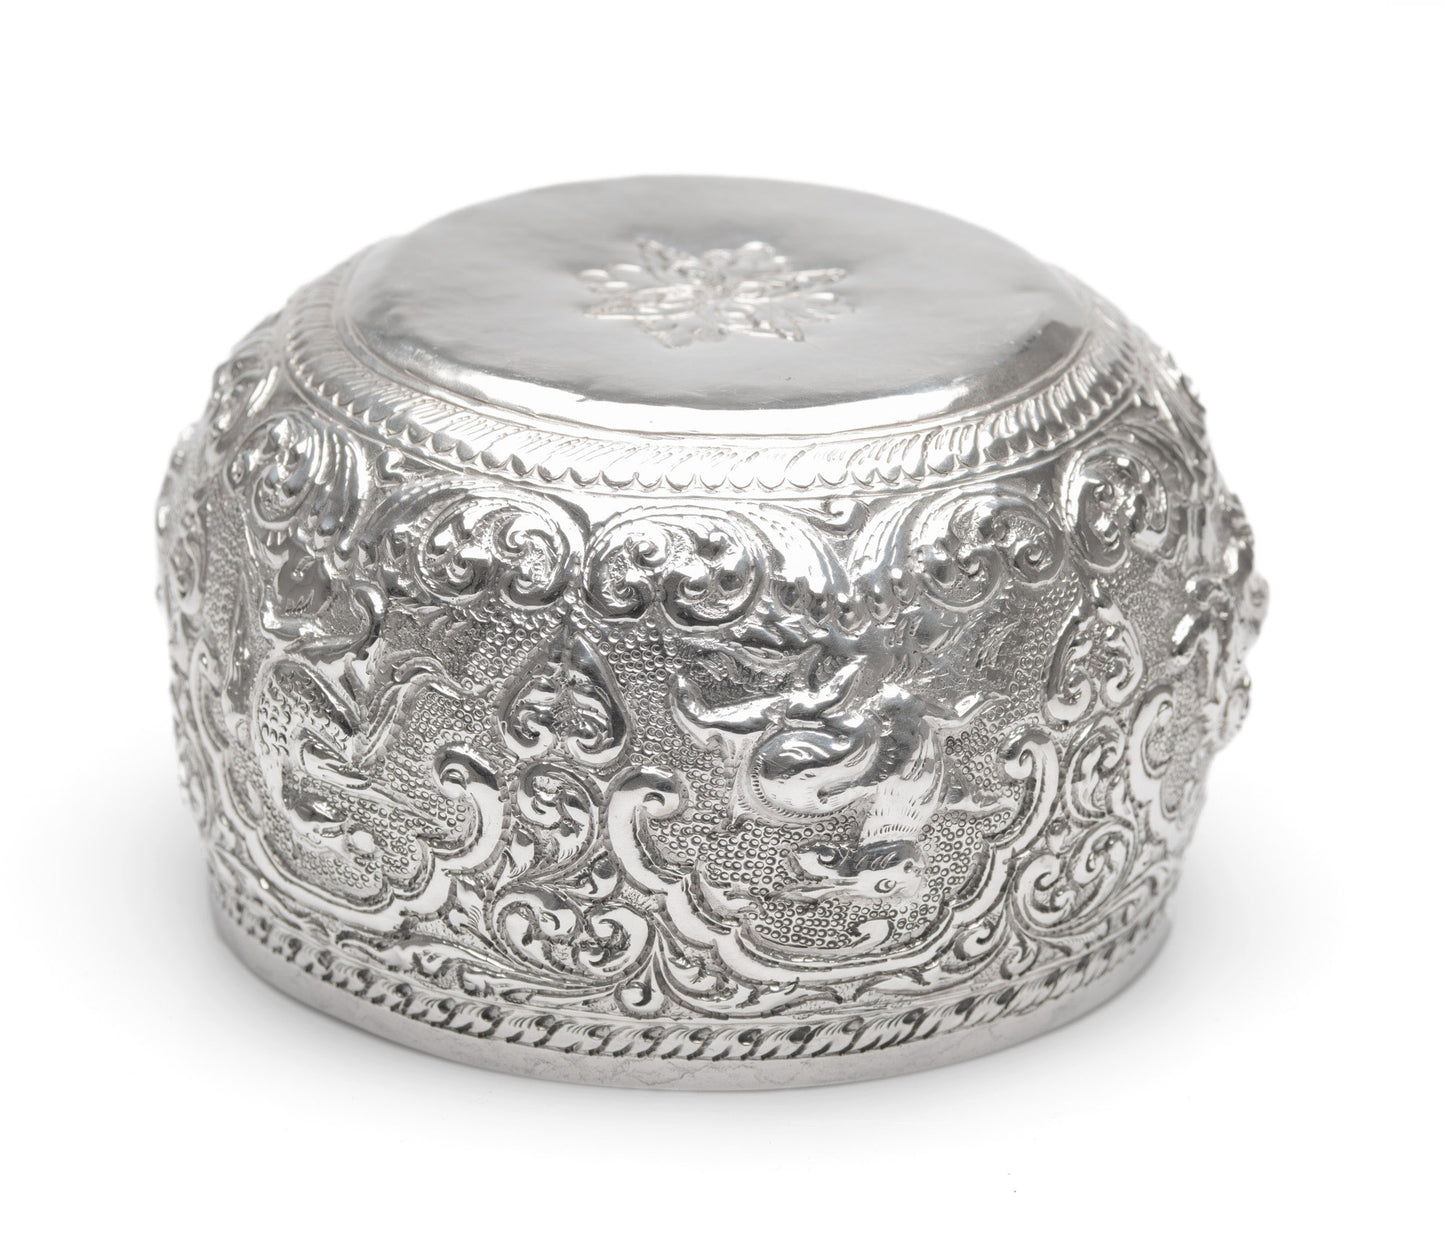 Antique Burmese Silver Thabeik Bowl with Repousse Fantastical Creatures (Code 2572)